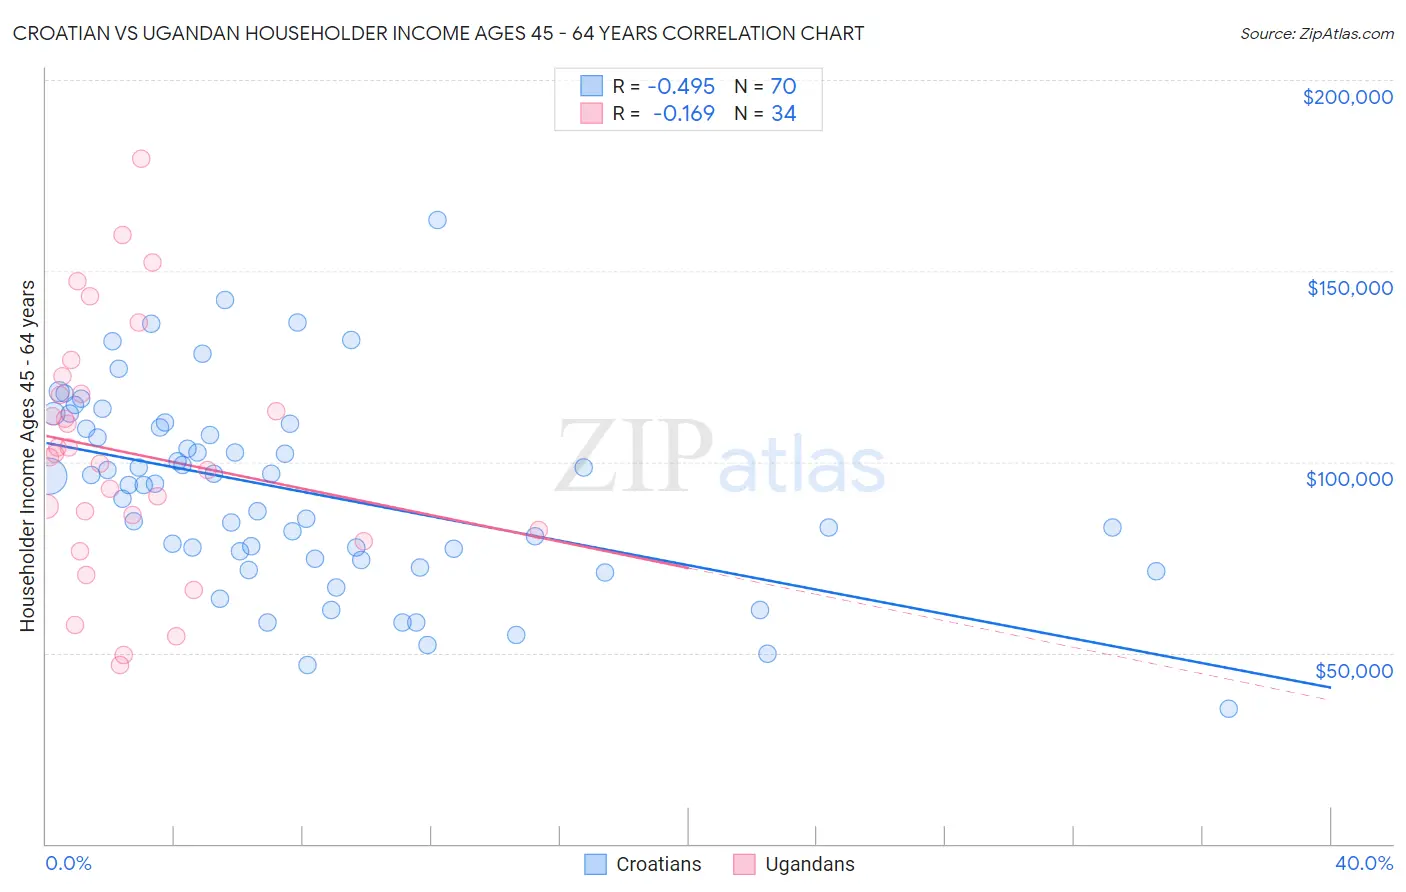 Croatian vs Ugandan Householder Income Ages 45 - 64 years